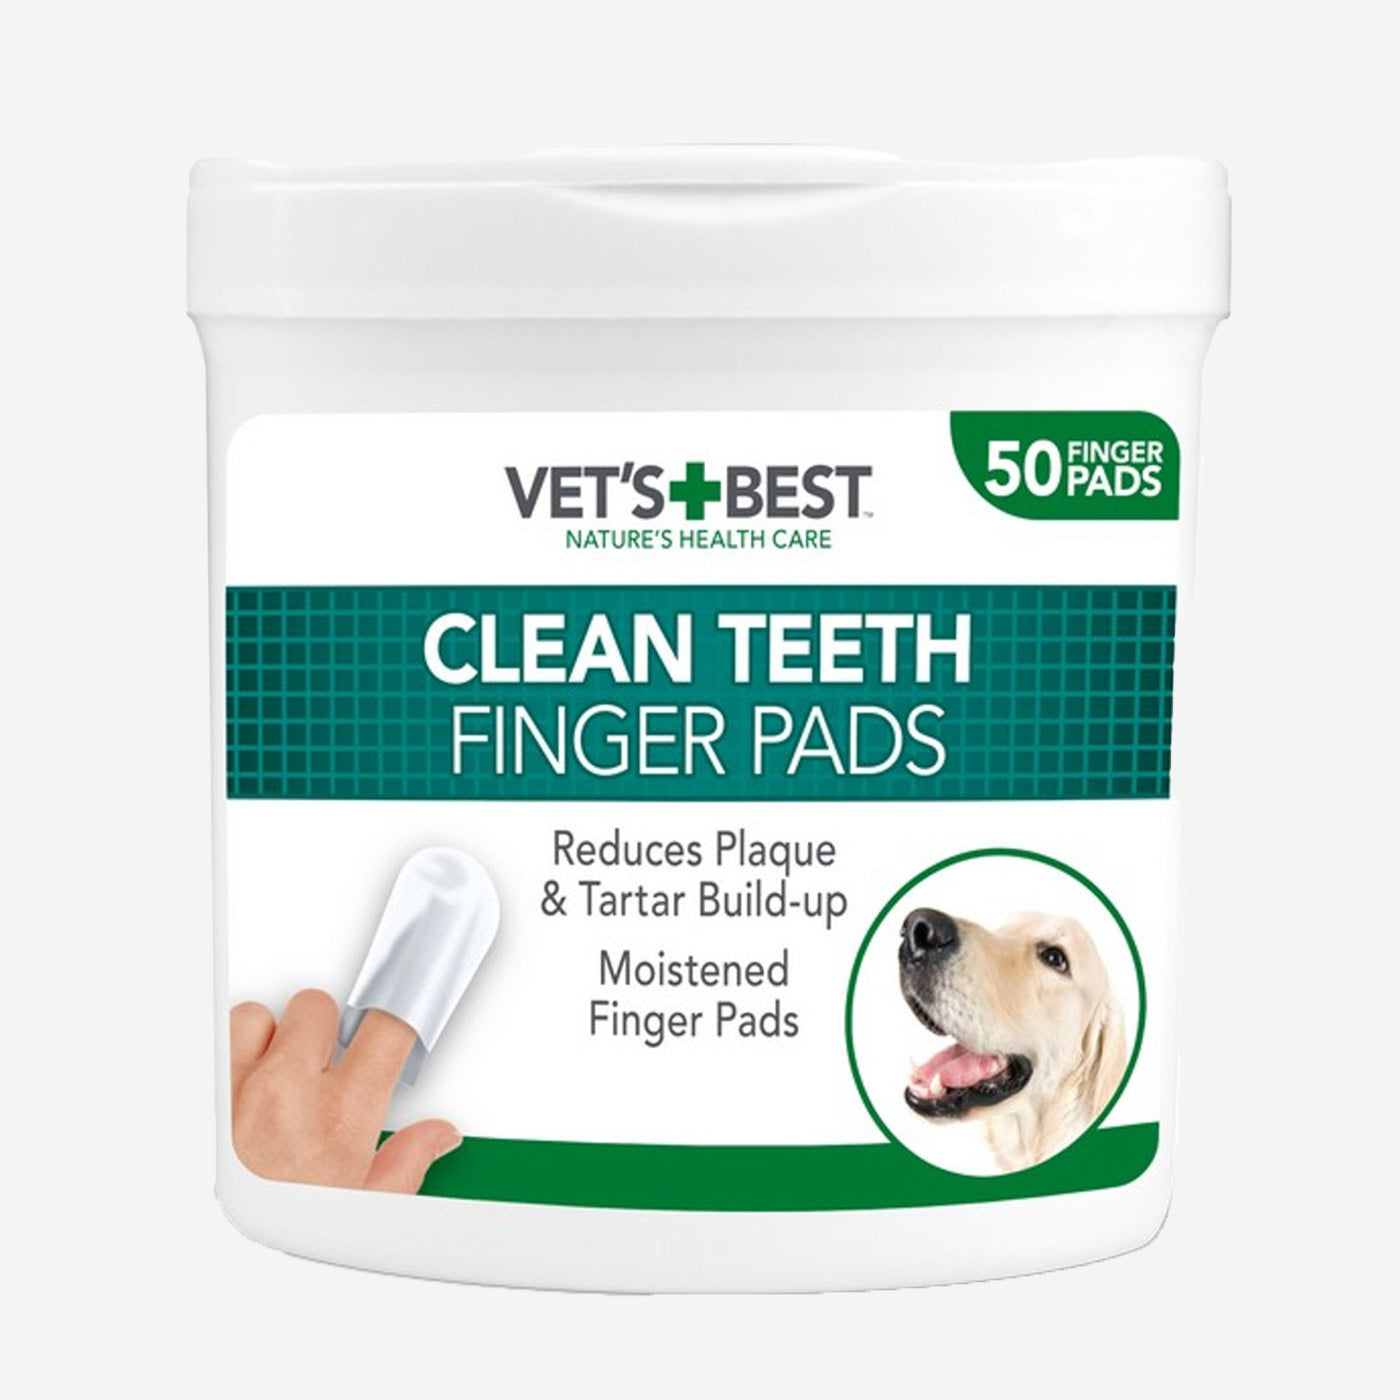 Vet's Best Clean Teeth Finger Pads for Dogs